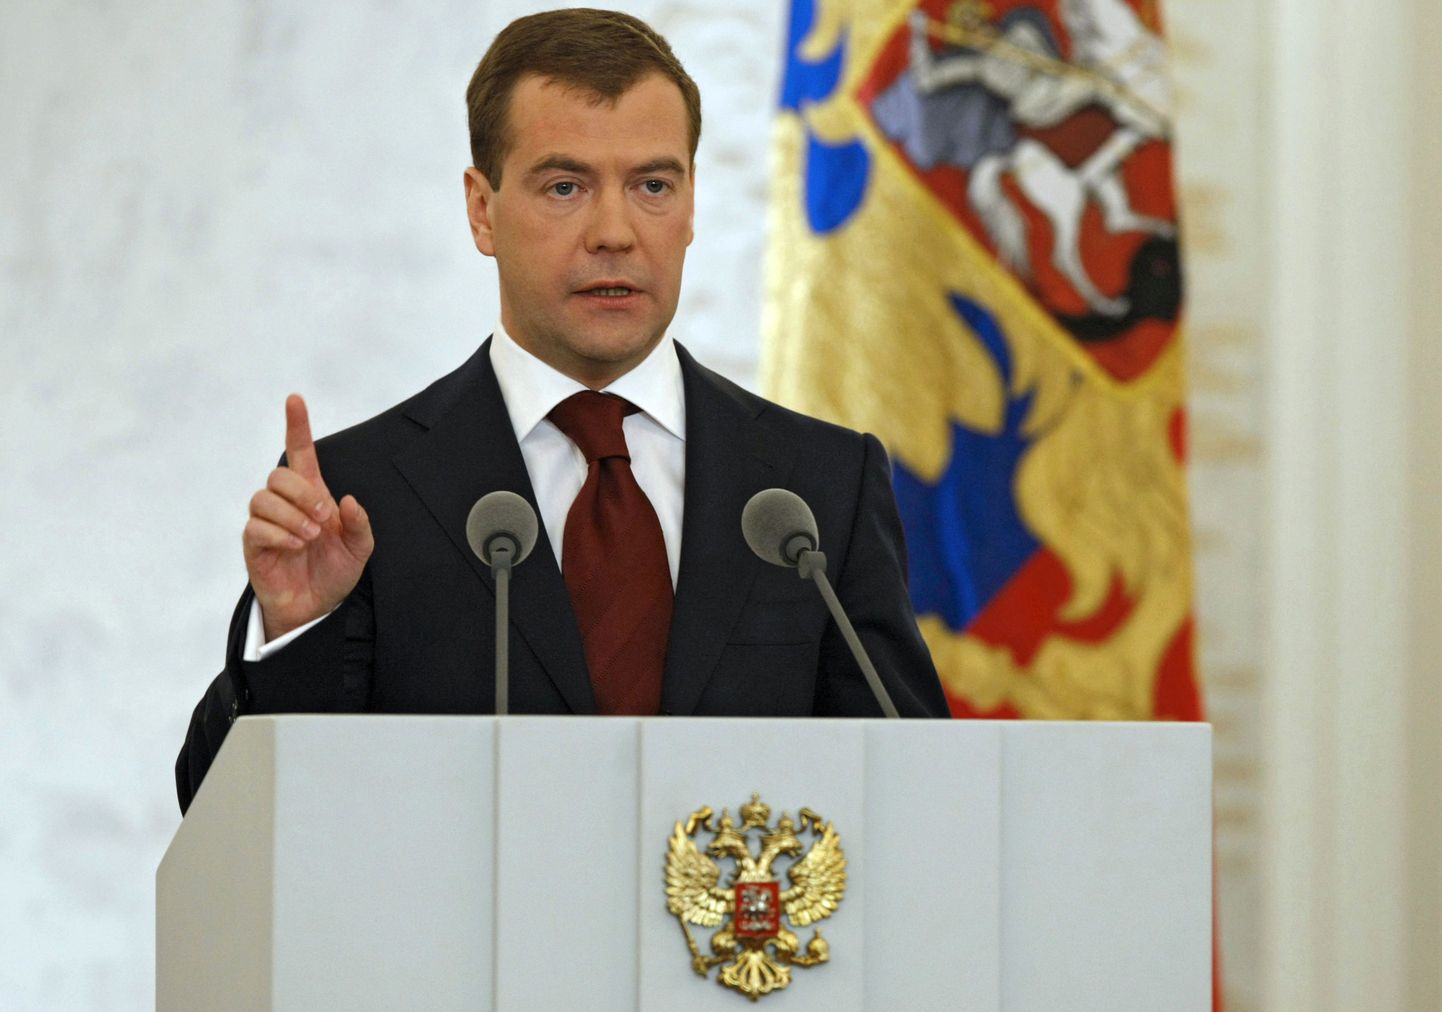 Vene Föderatsiooni president Dmitri Medvedev aastakõnet pidamas.